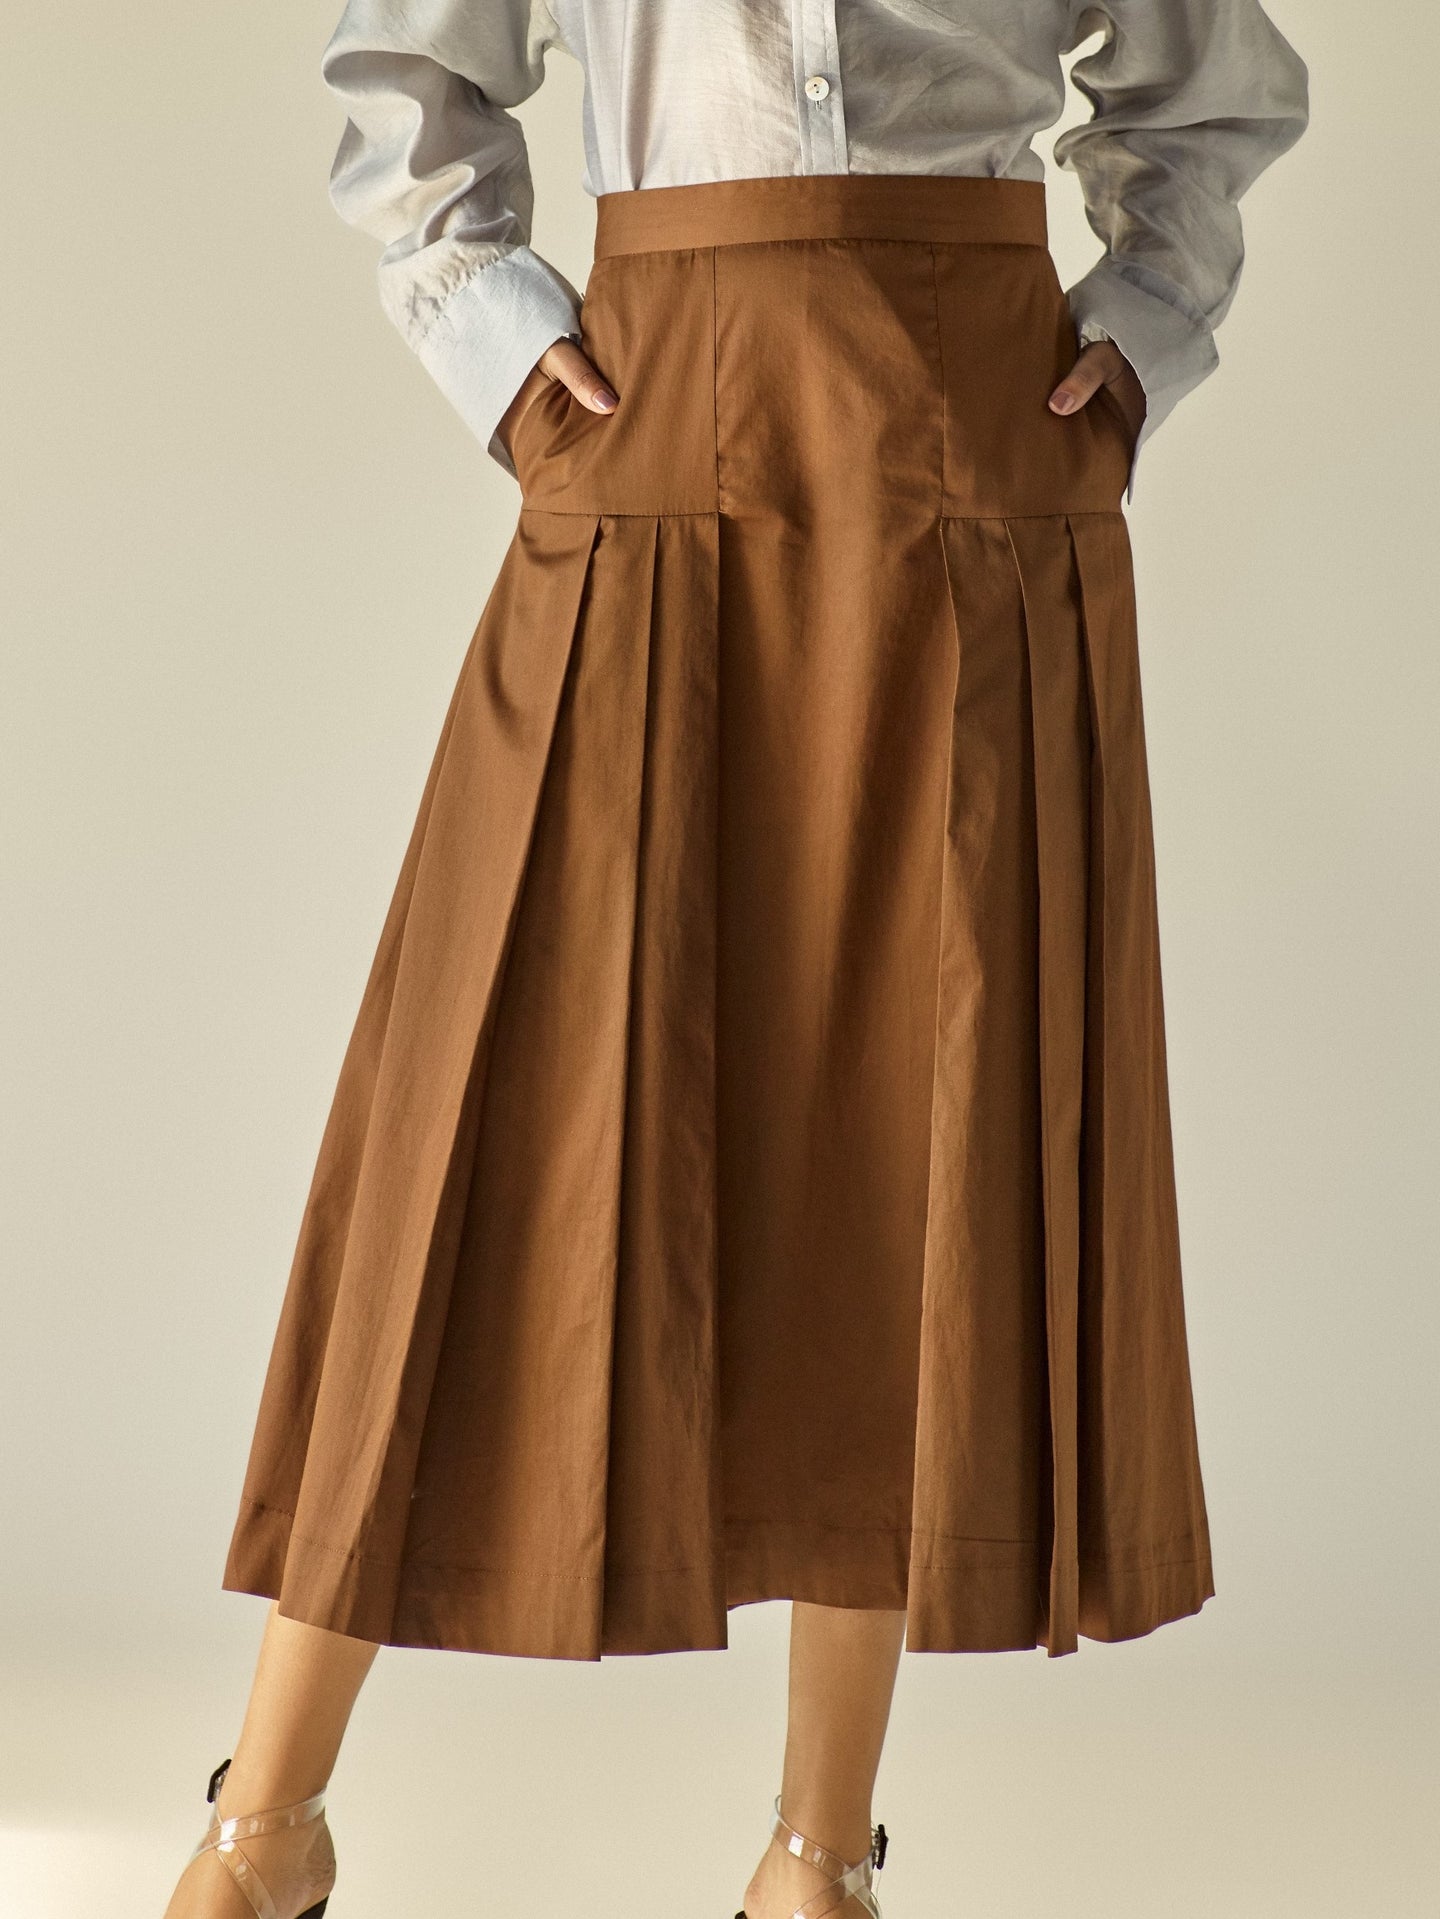 Vintage Midi Skirt - B E N N C H